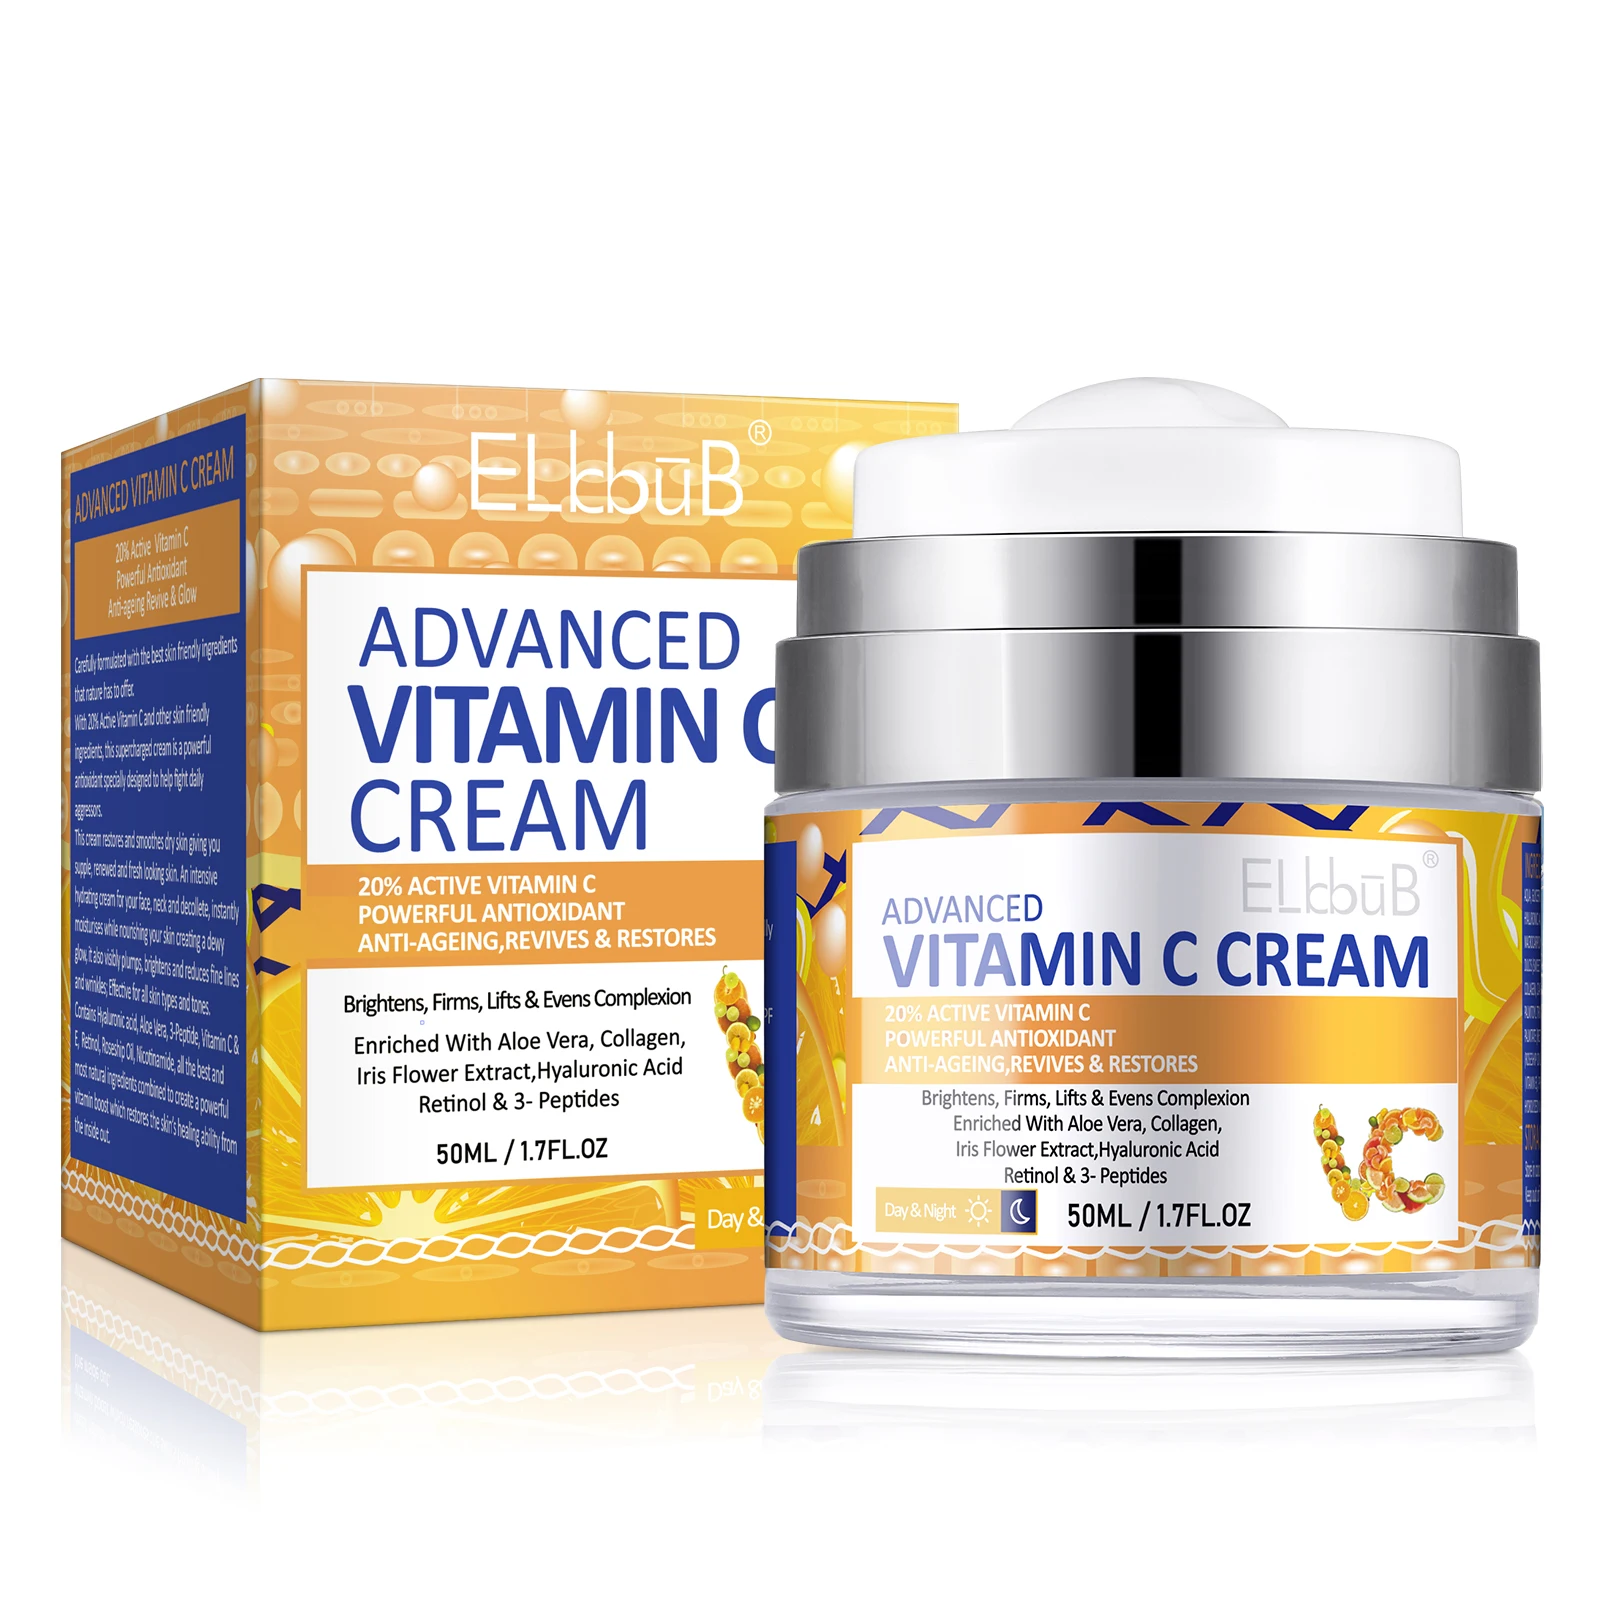 elbbub advanced powerful antioxidant anti-aging day and night whitening vitamin c face cream